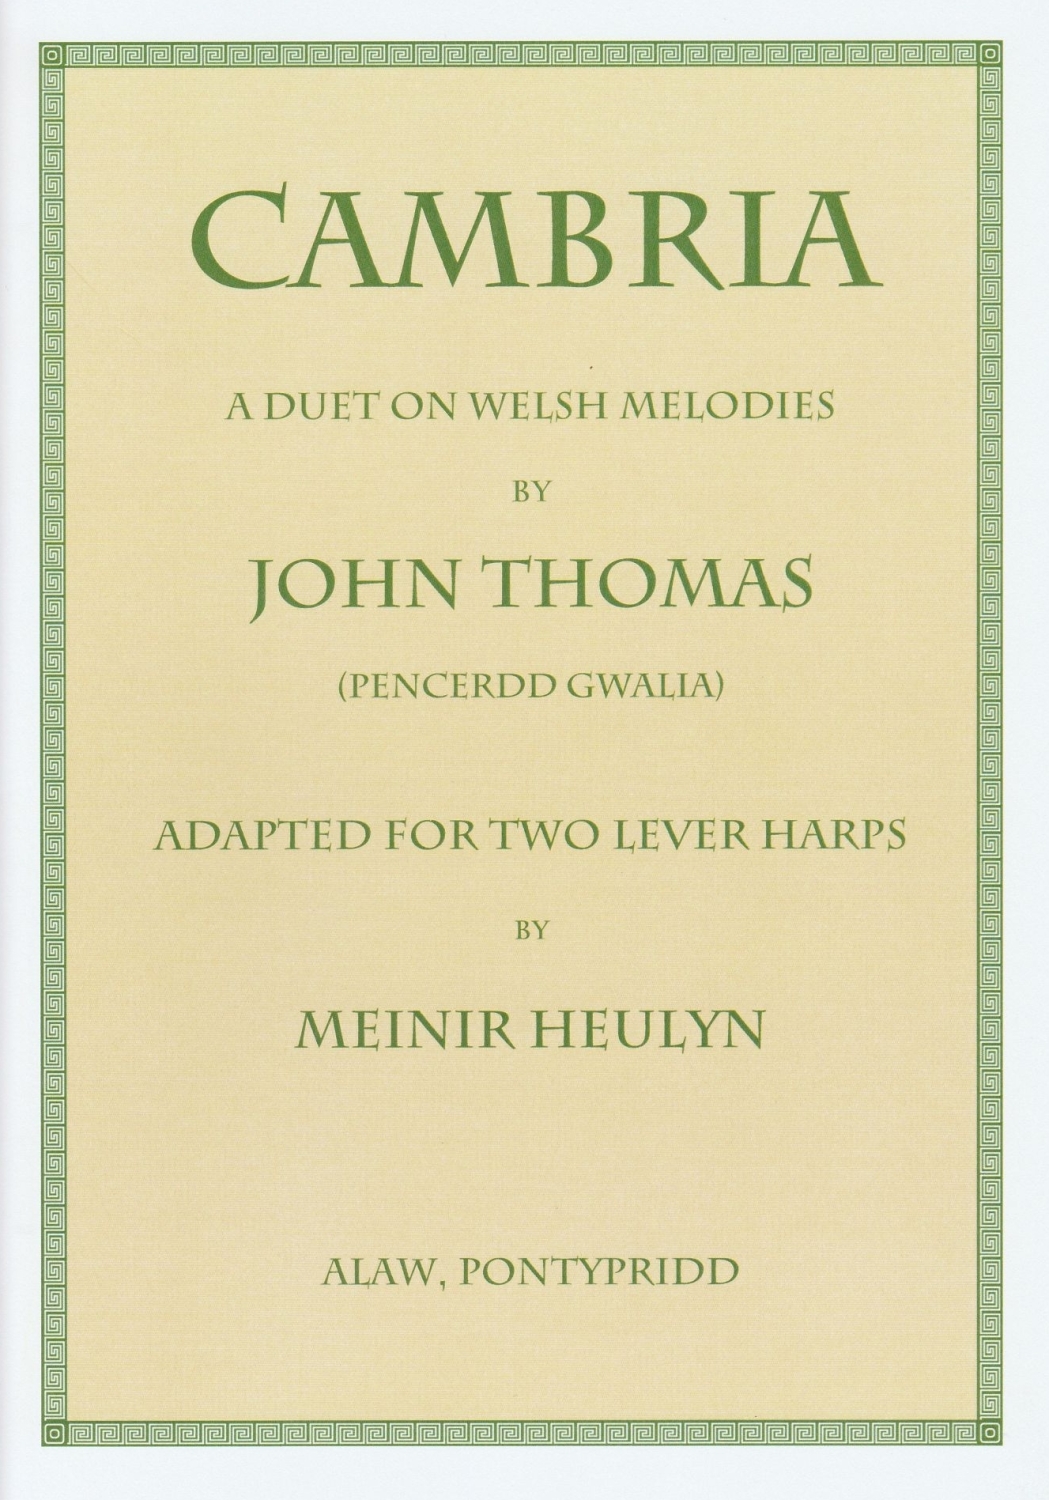 Cambria for Two Lever Harps - John Thomas (Pencerdd Gwalia)